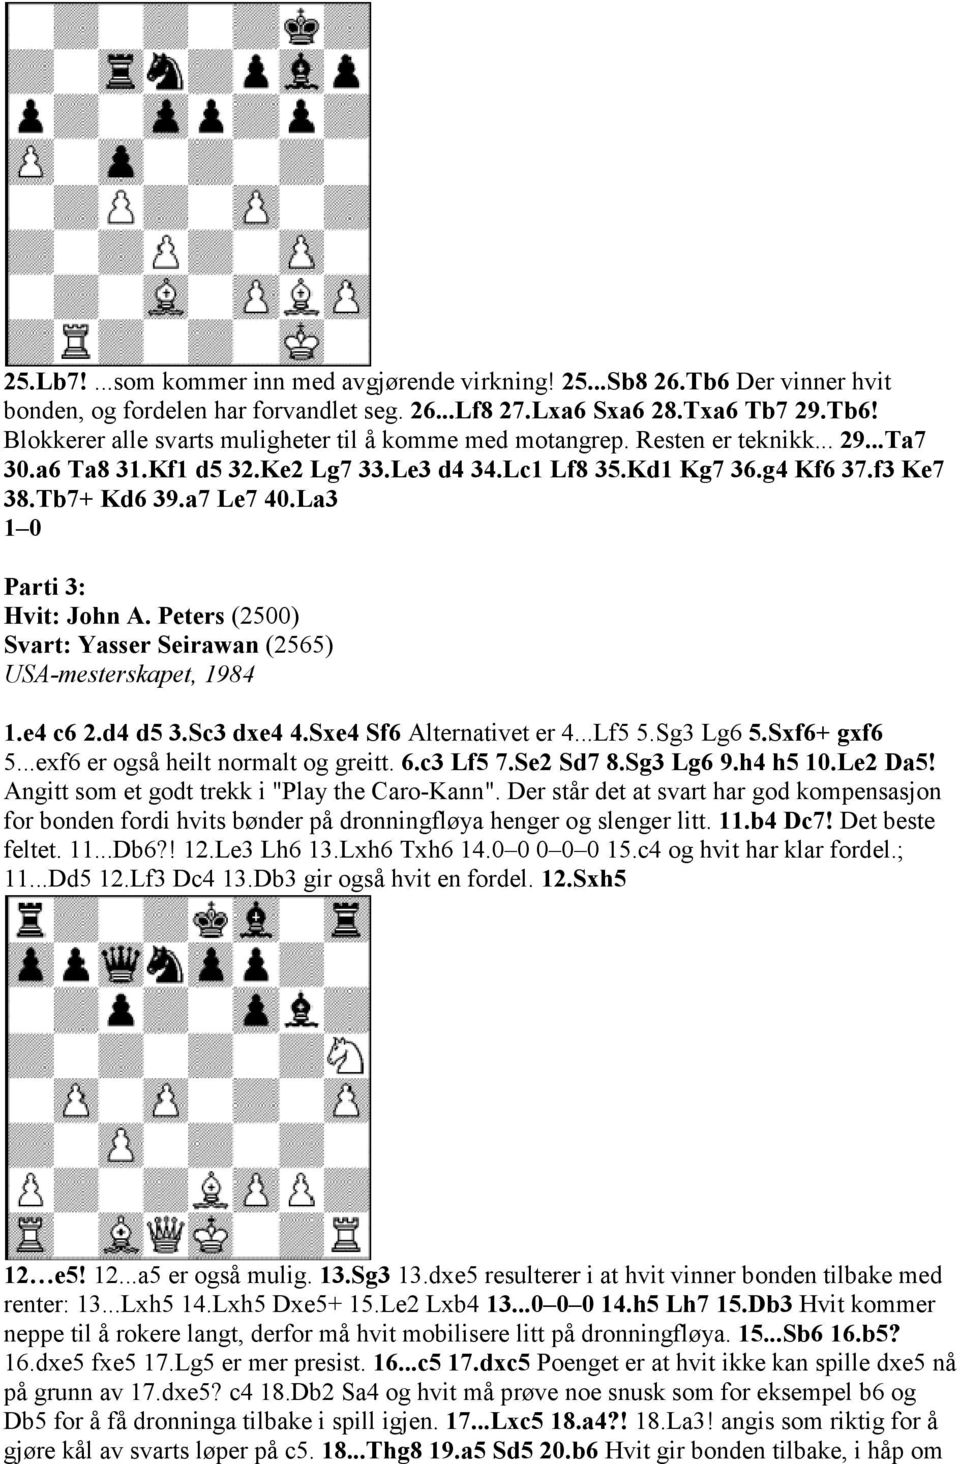 Peters (2500) Svart: Yasser Seirawan (2565) USA-mesterskapet, 1984 1.e4 c6 2.d4 d5 3.Sc3 dxe4 4.Sxe4 Sf6 Alternativet er 4...Lf5 5.Sg3 Lg6 5.Sxf6+ gxf6 5...exf6 er også heilt normalt og greitt. 6.